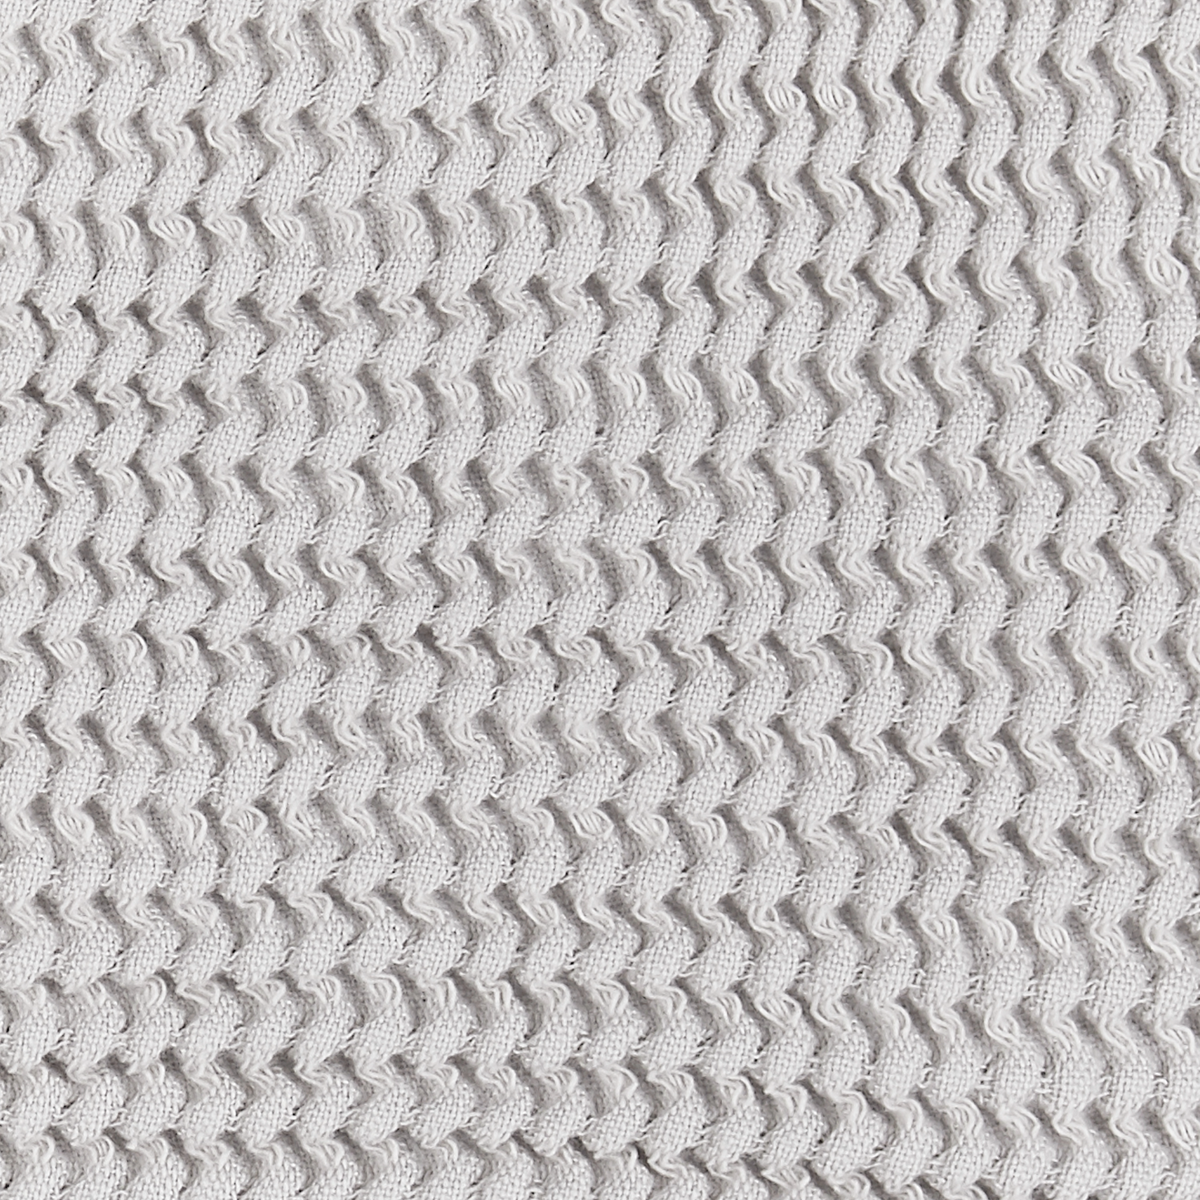 Fabric Closeup of Matouk Kiran Waffle Bath Robe in Silver Color